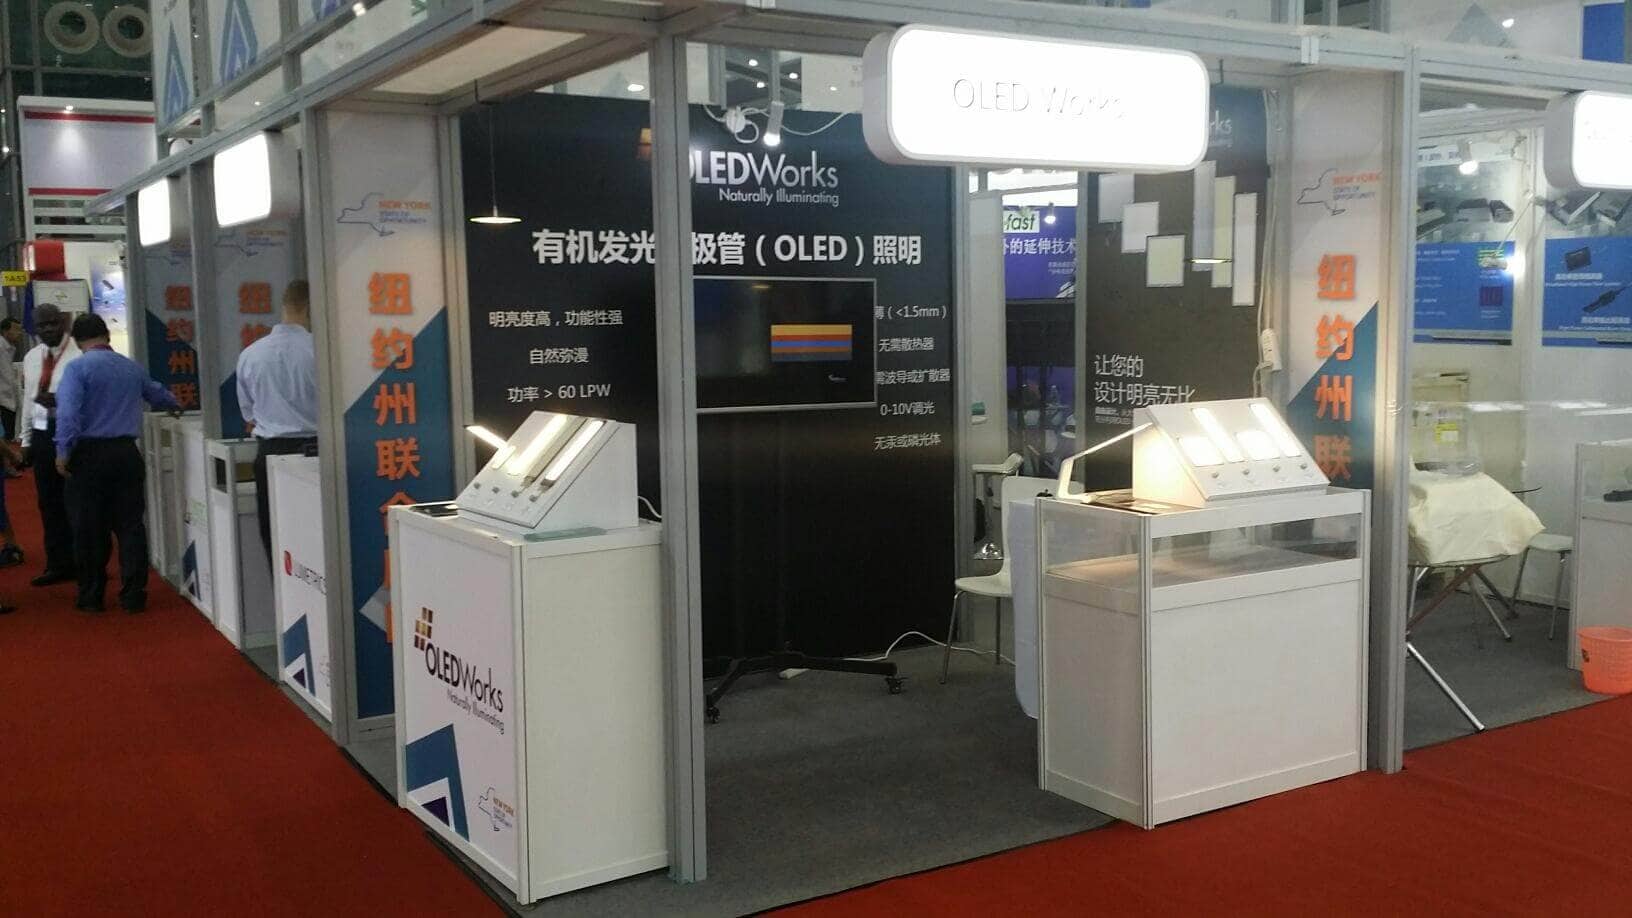 OLEDWorks booth at CIOE in Shenzhen